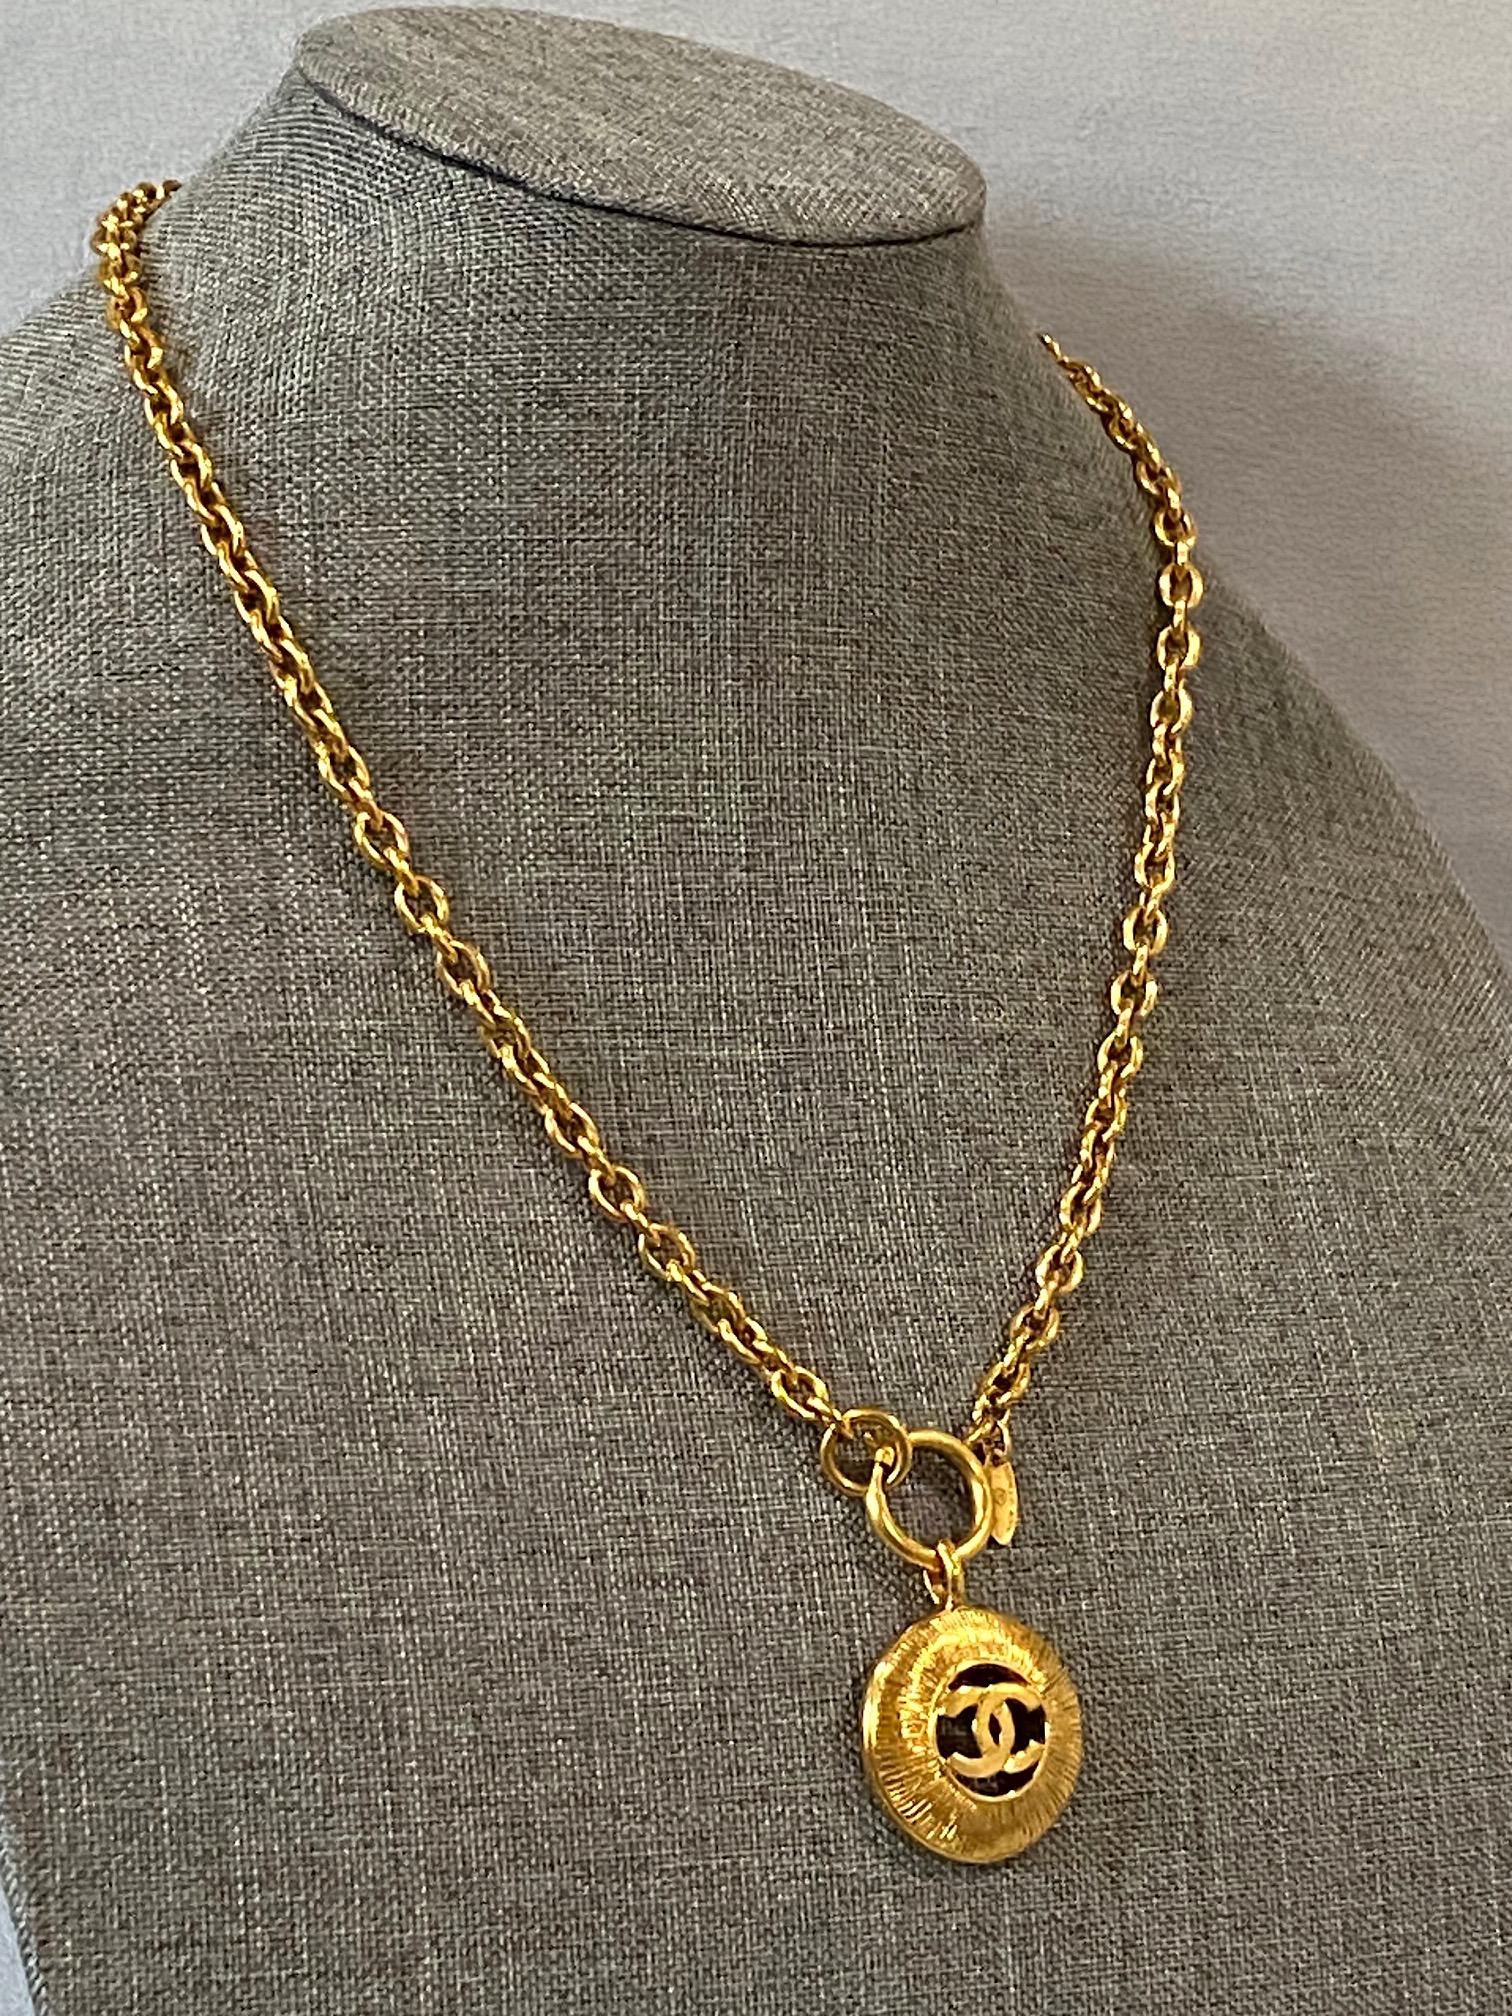 Chanel 1980s Pendant Necklace 2